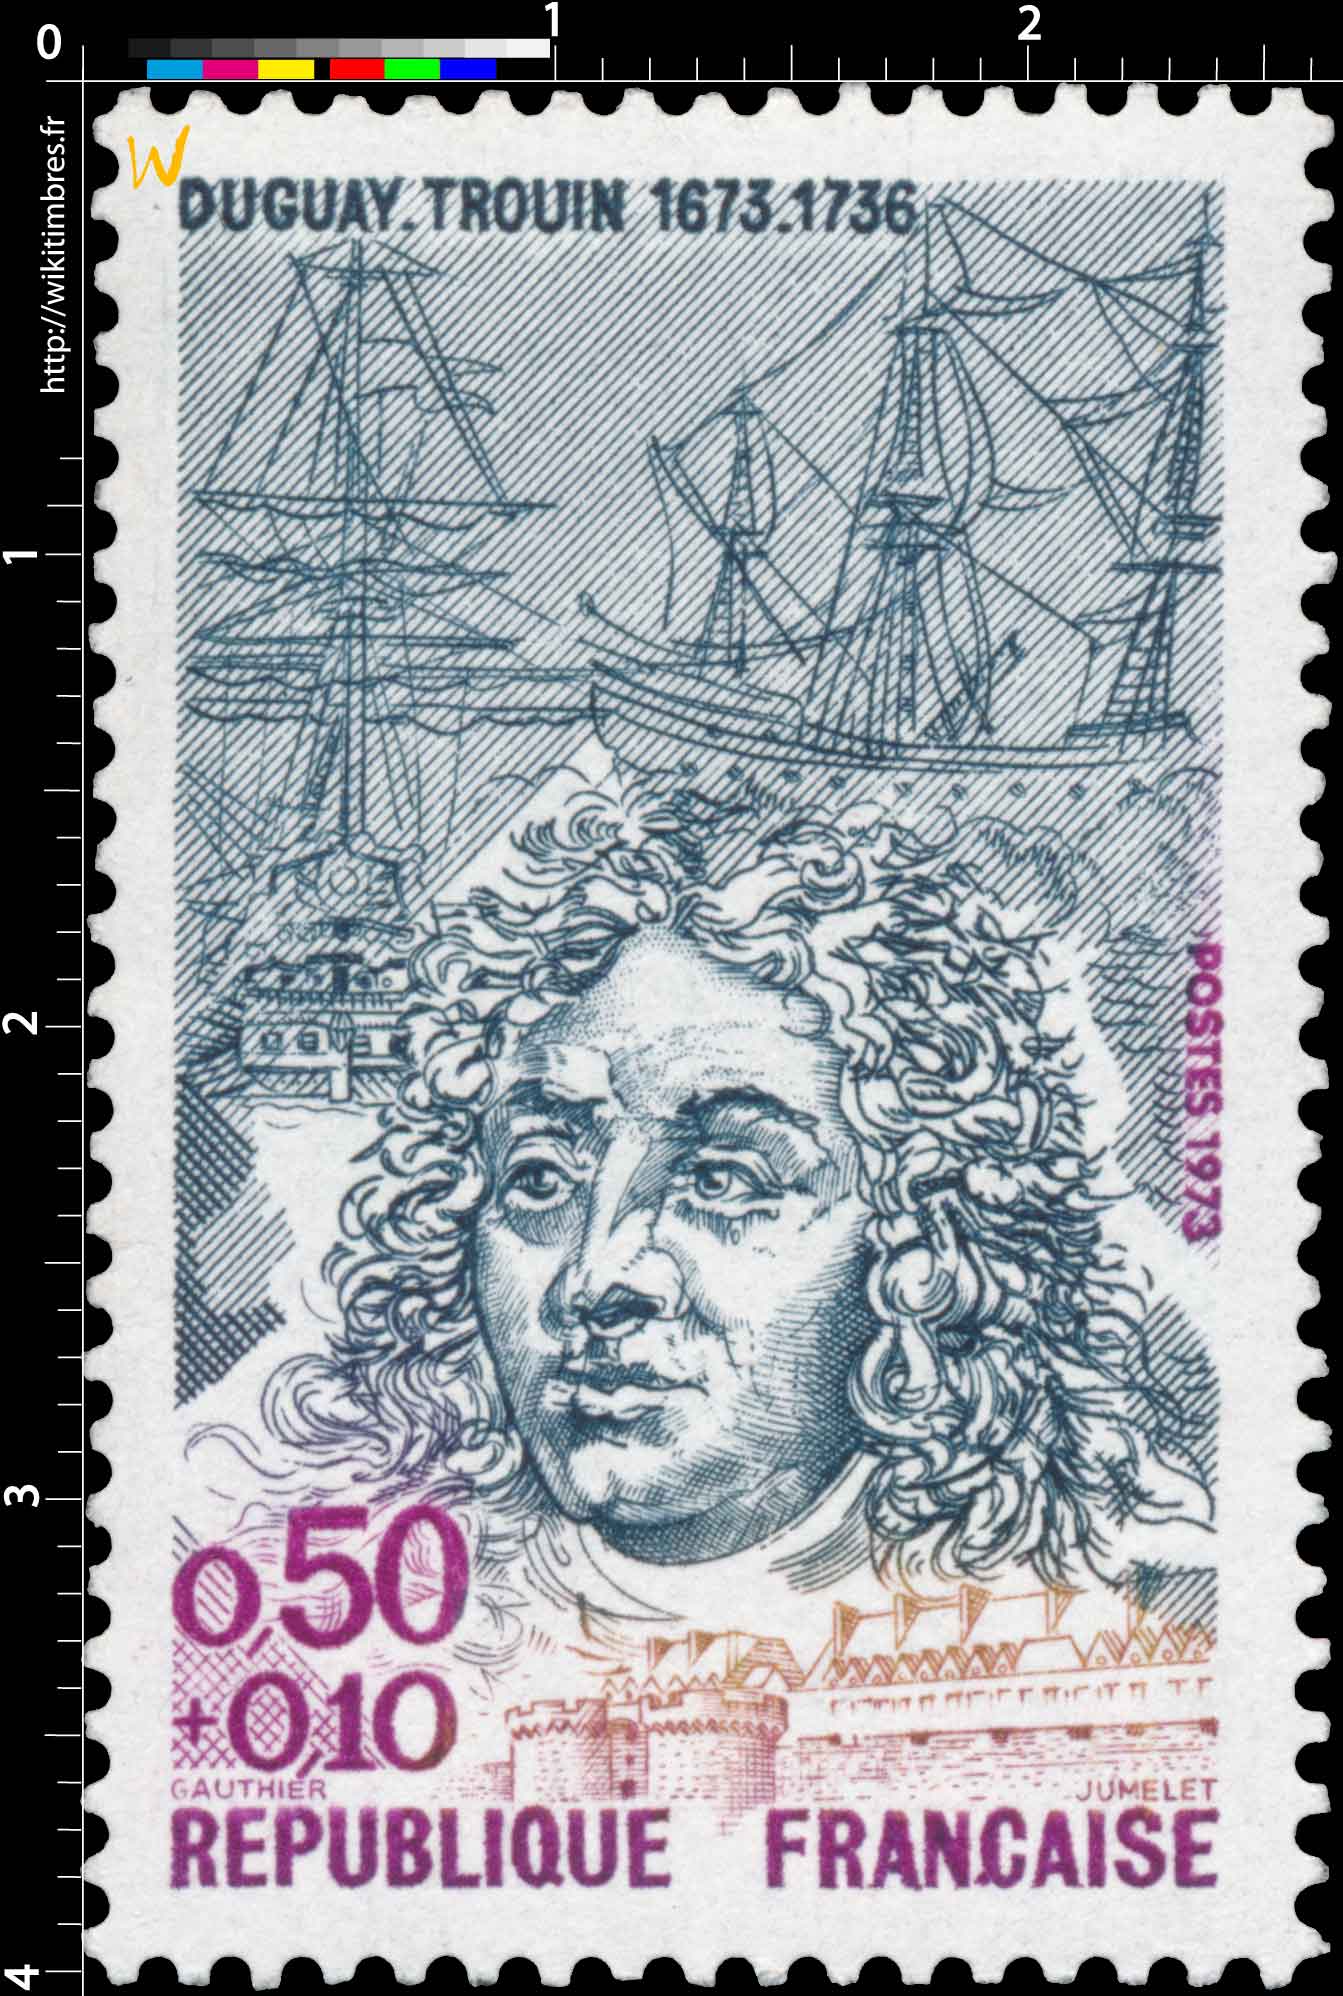 1973 DUGUAY. TROUIN 1673-1736